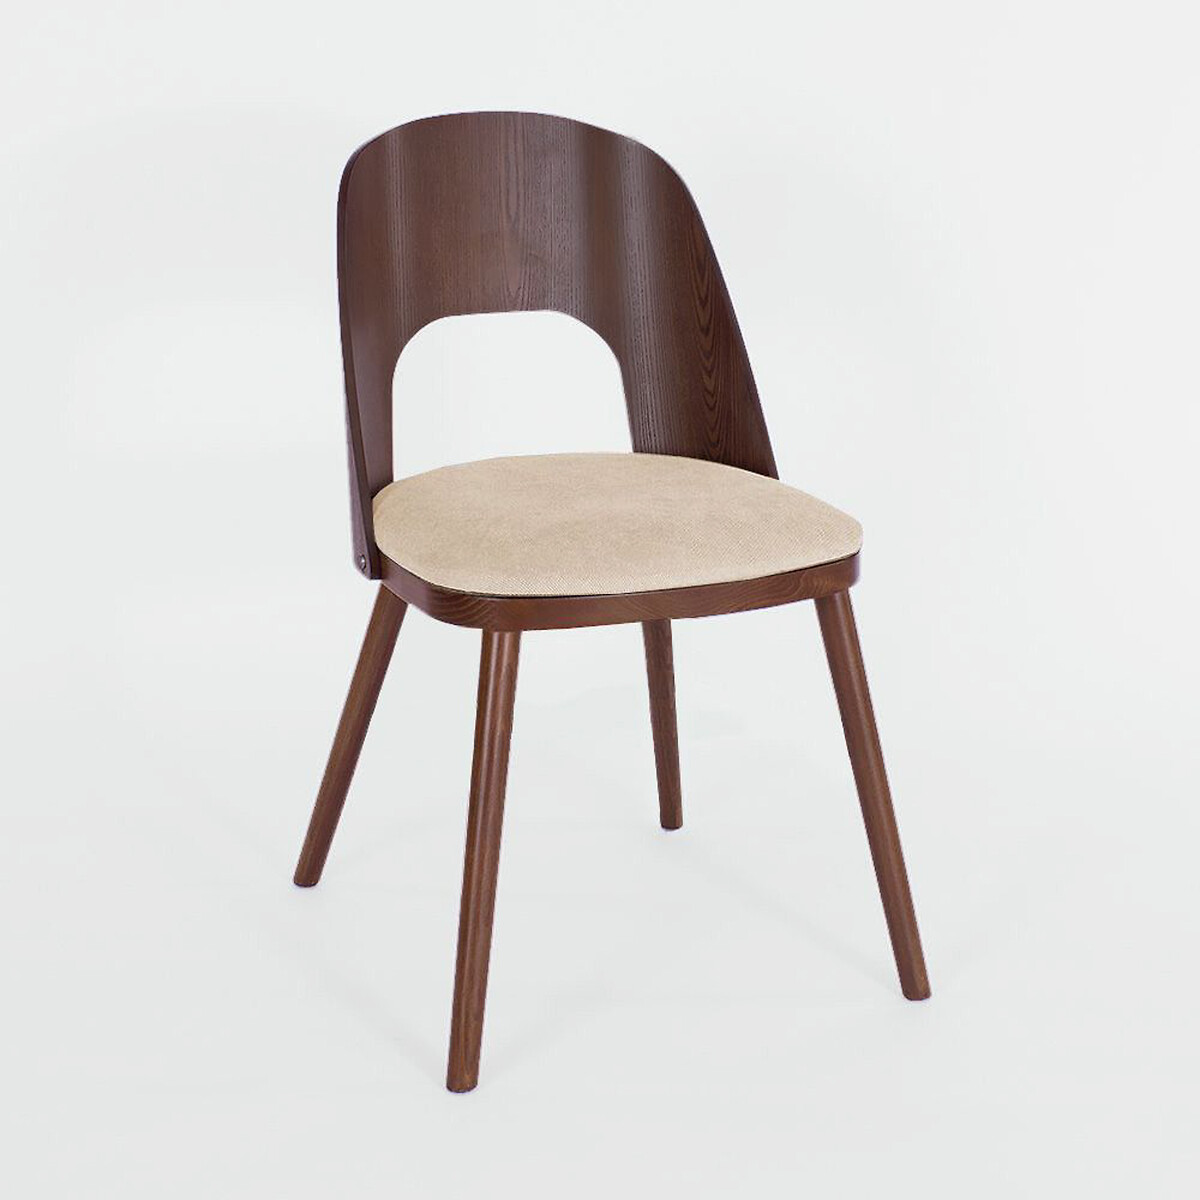 Стул Антверпен единый размер бежевый стул бристоль единый размер бежевый